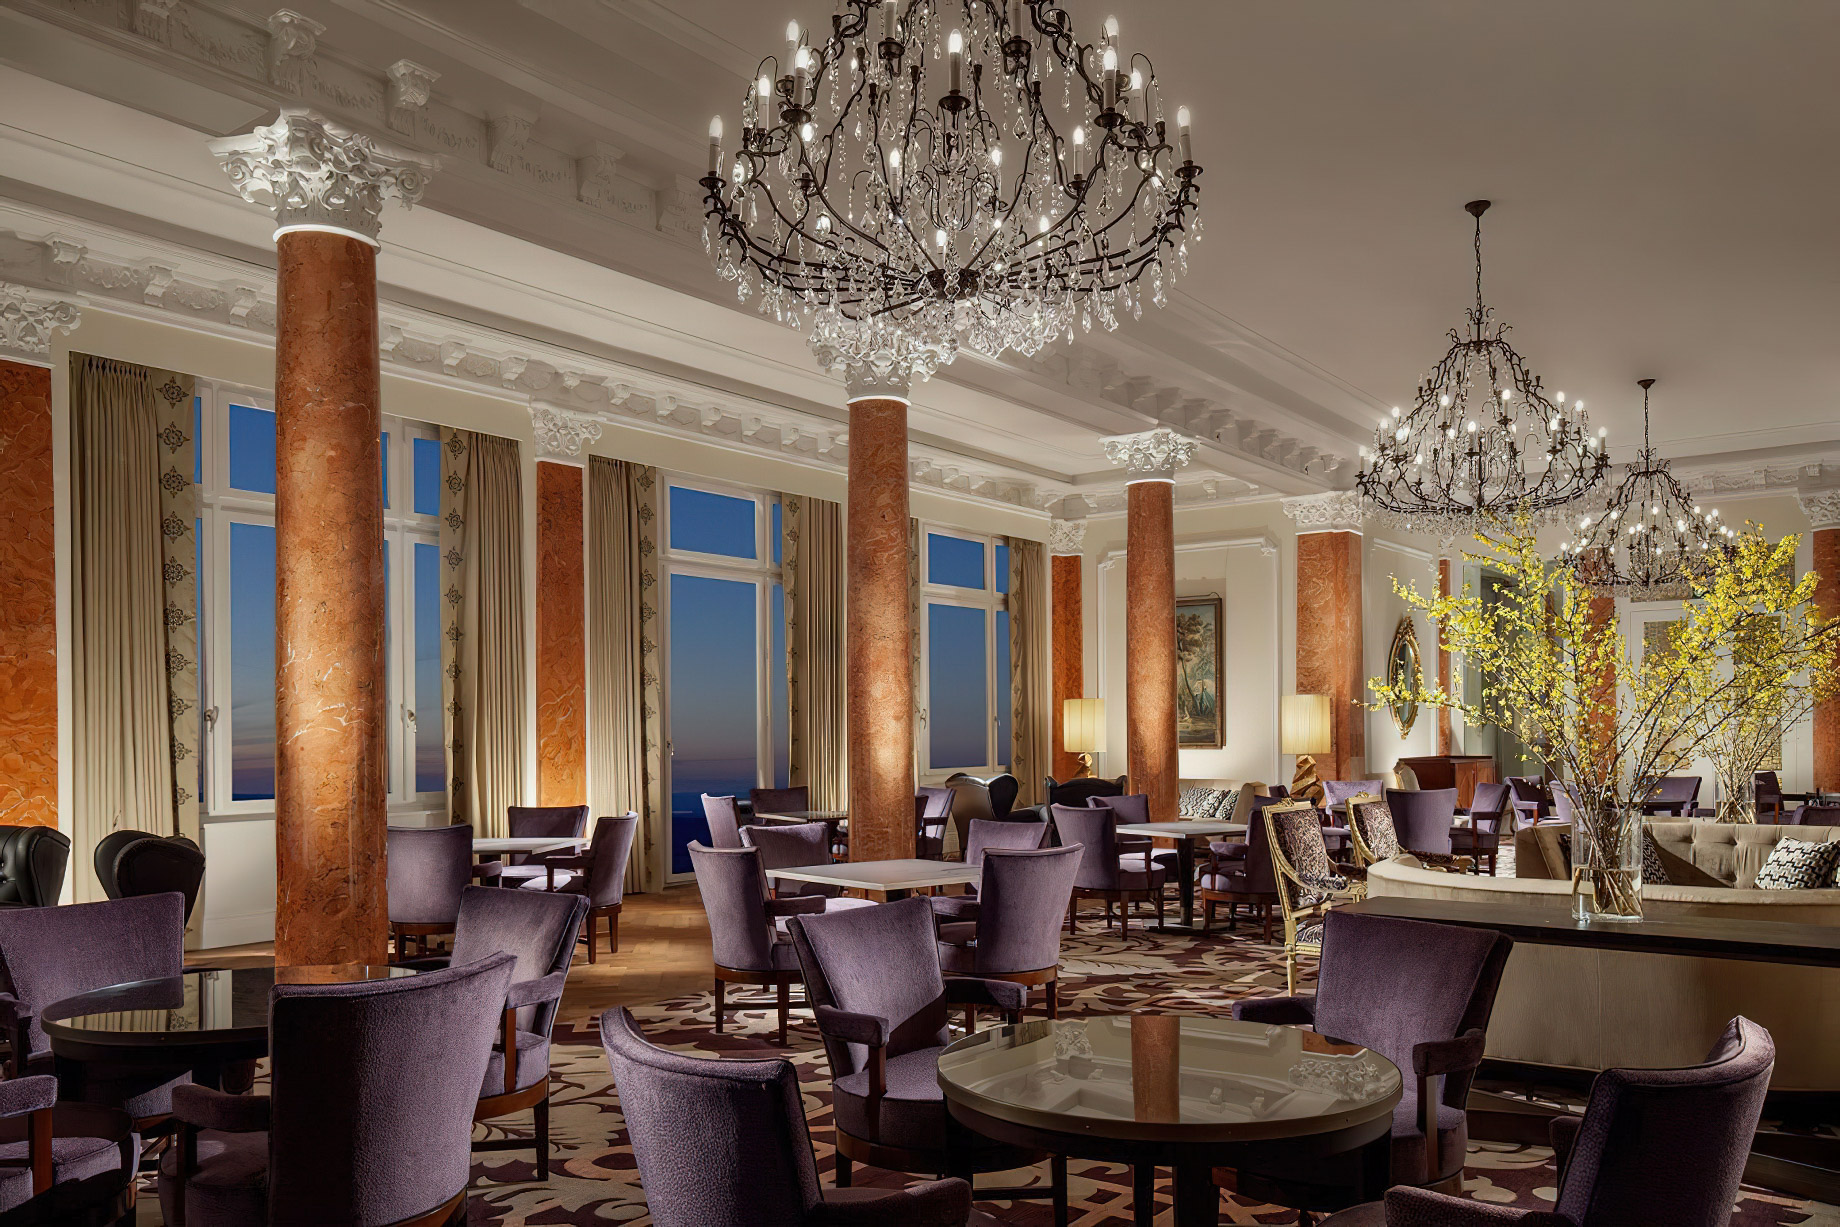 Palace Hotel - Burgenstock Hotels & Resort - Obburgen, Switzerland - Salon 1903 Palace Lounge Dining